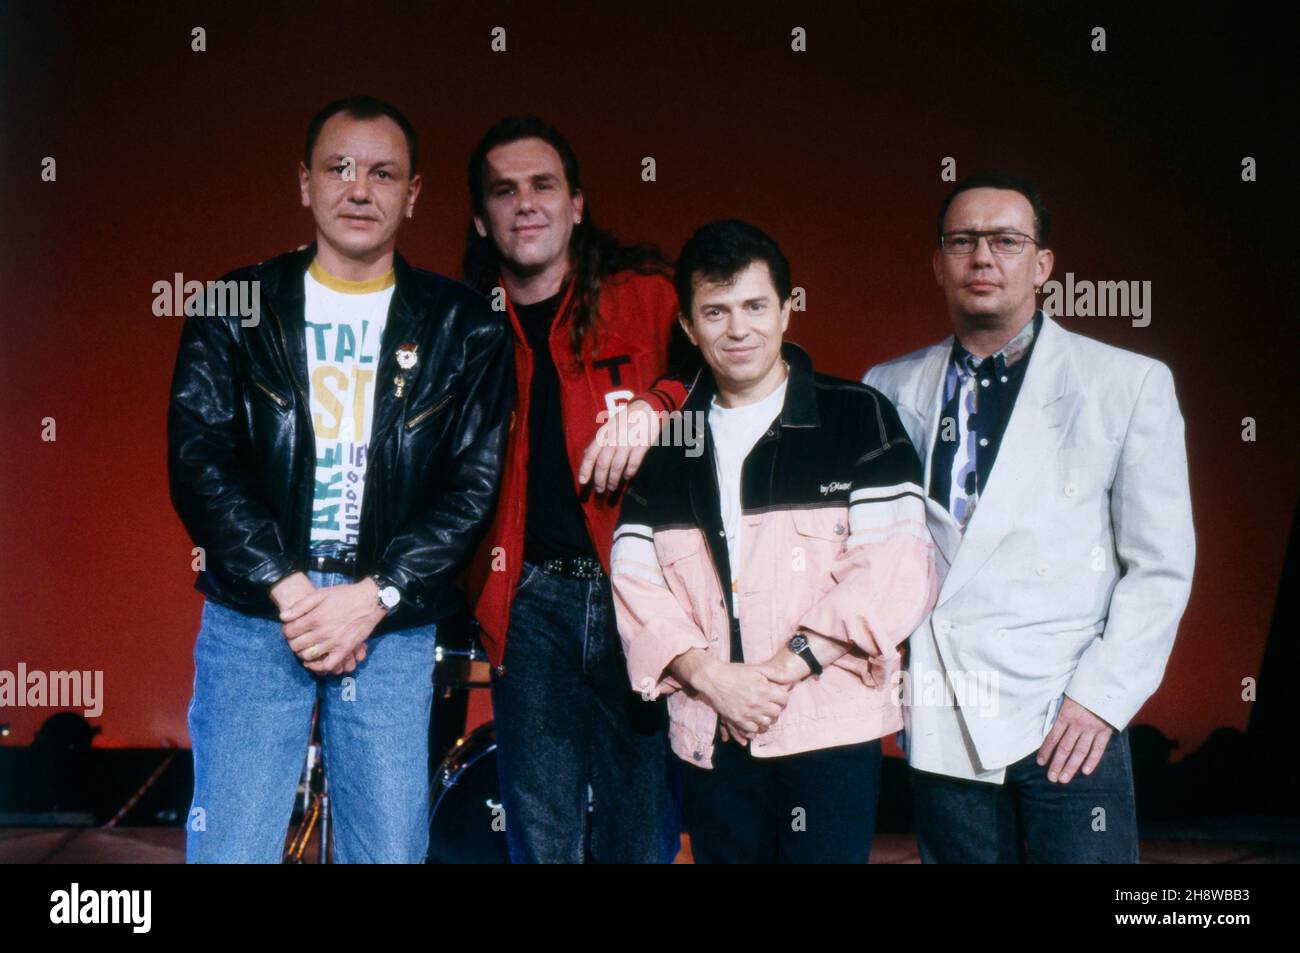 Spider Murphy Gang, Münchner Rock 'n' Roll Band, Bild circa 1990.  Spider Murphy Gang, Munich Rock 'n' Roll band, photo circa 1990. Stock Photo